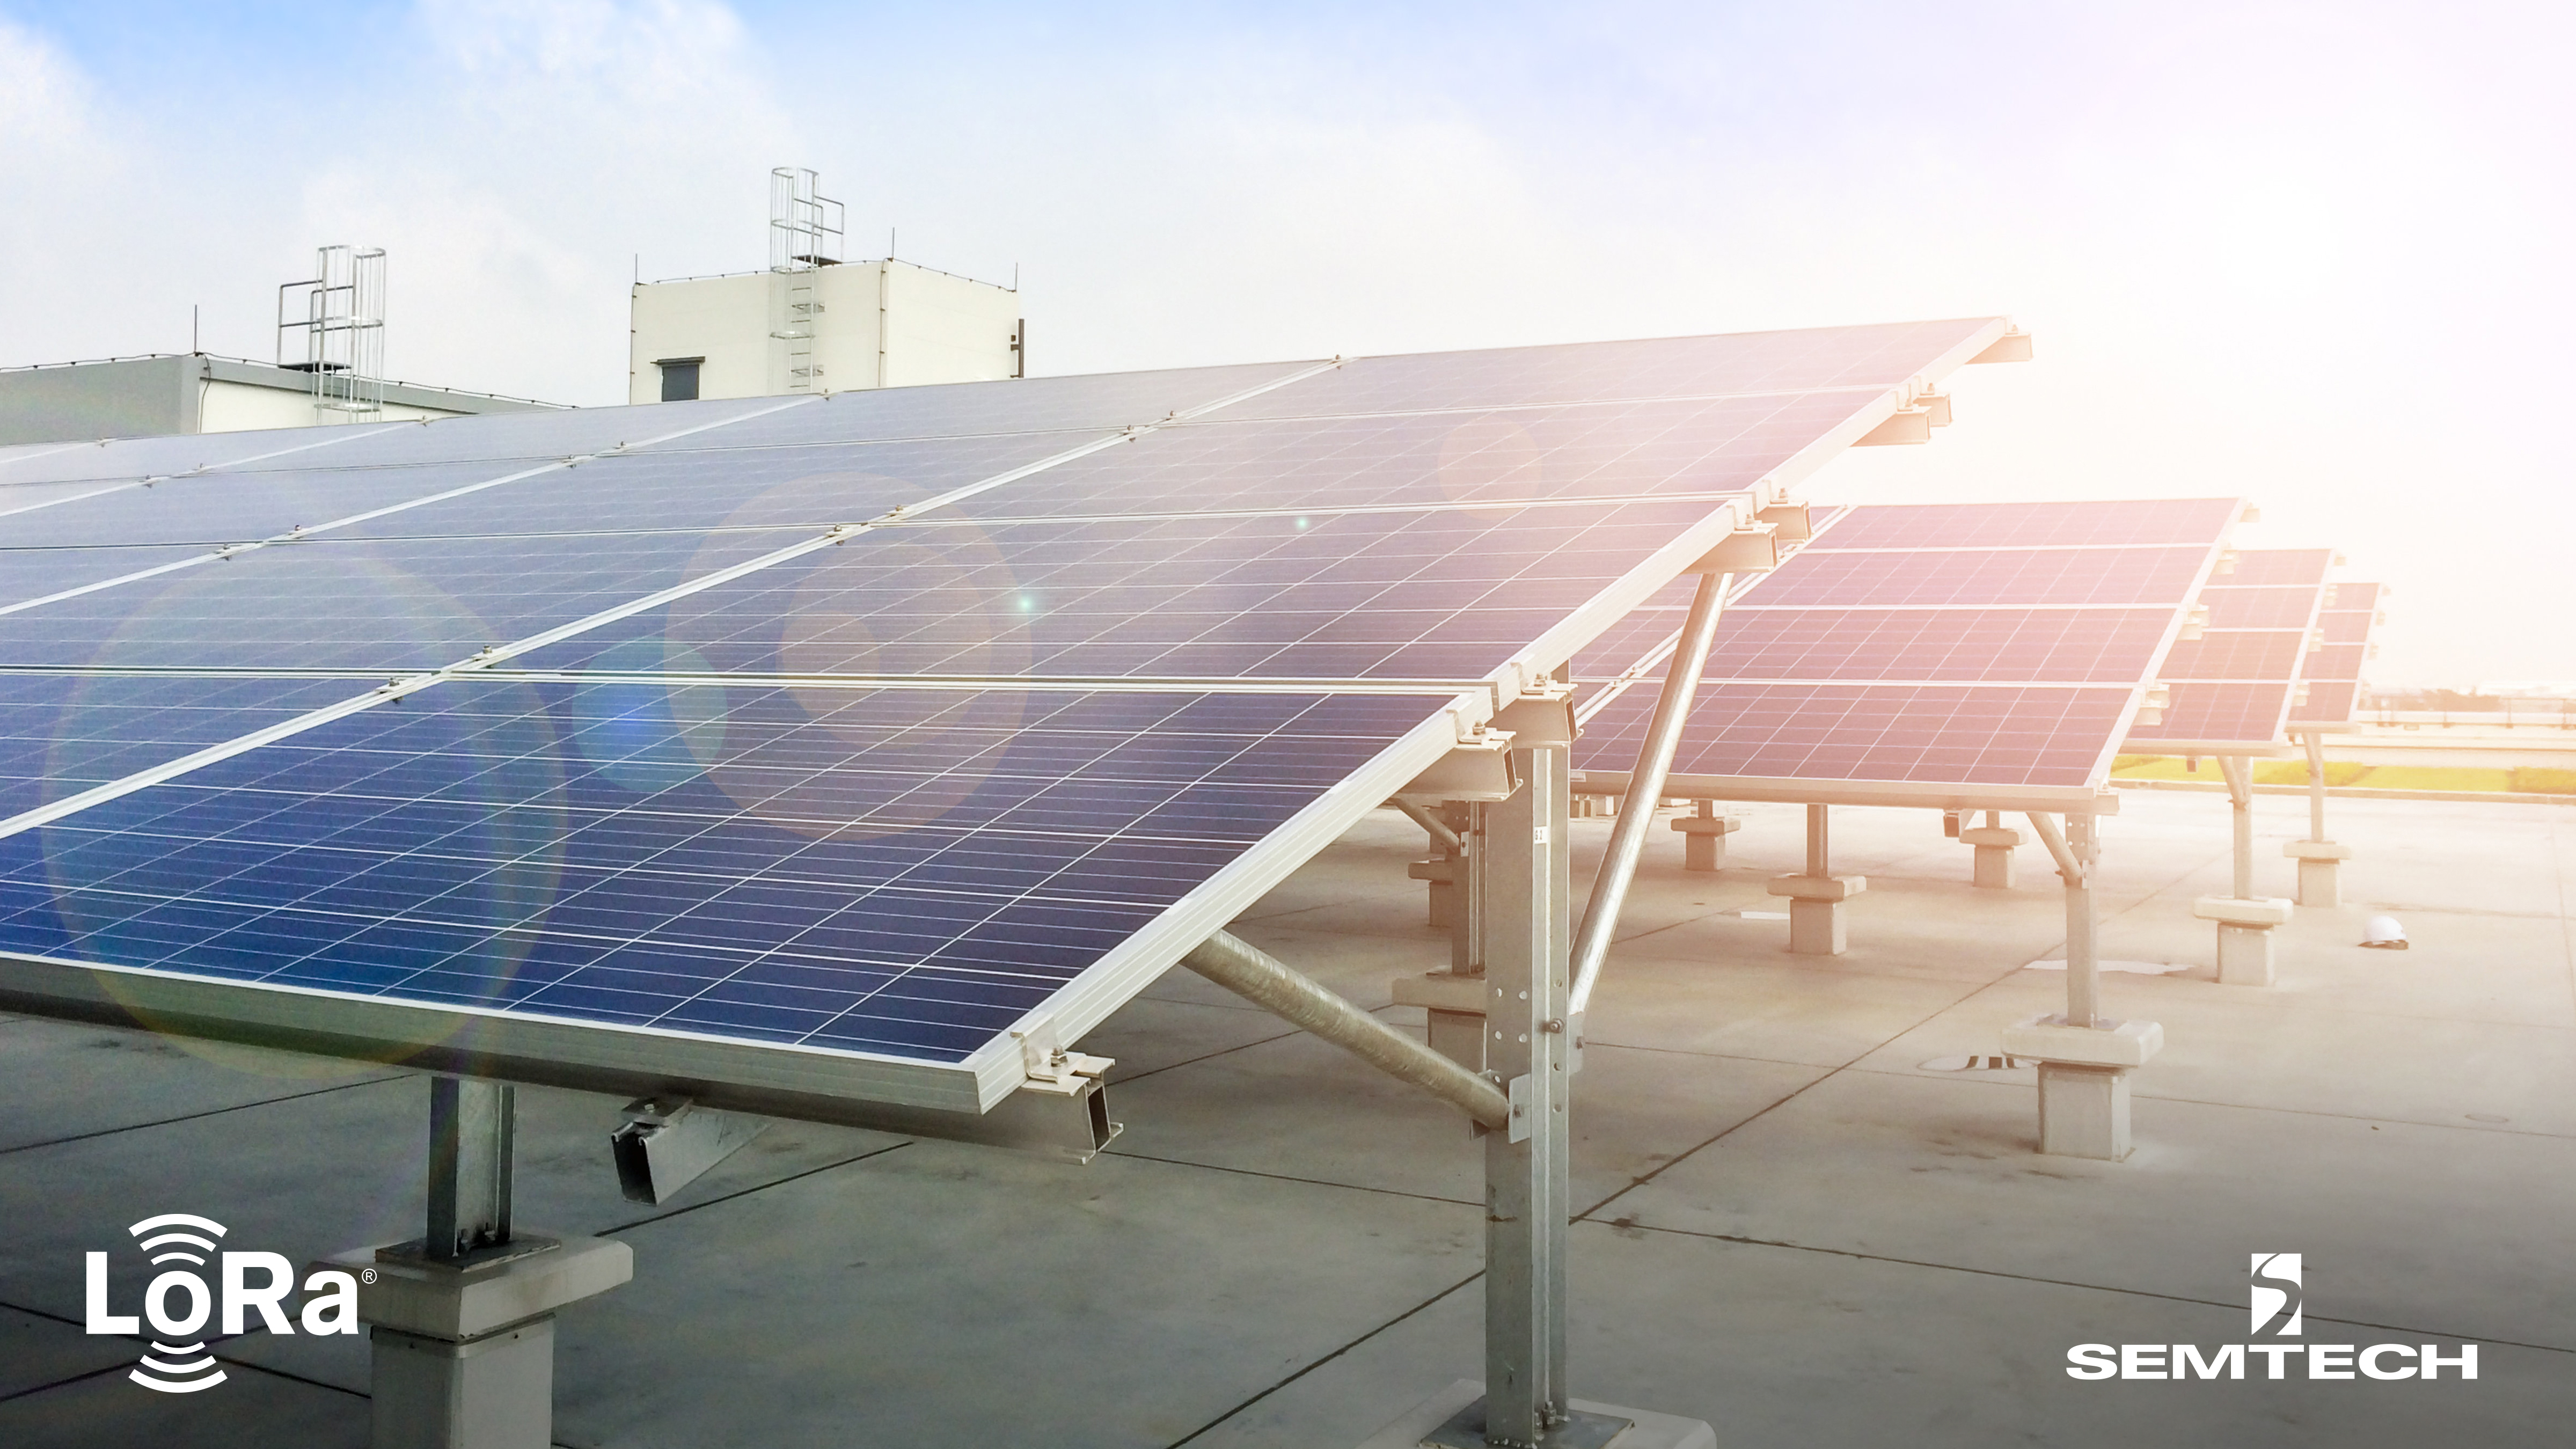 IoT Based Smart Solar Panel Monitoring - The Future of Energy Generation